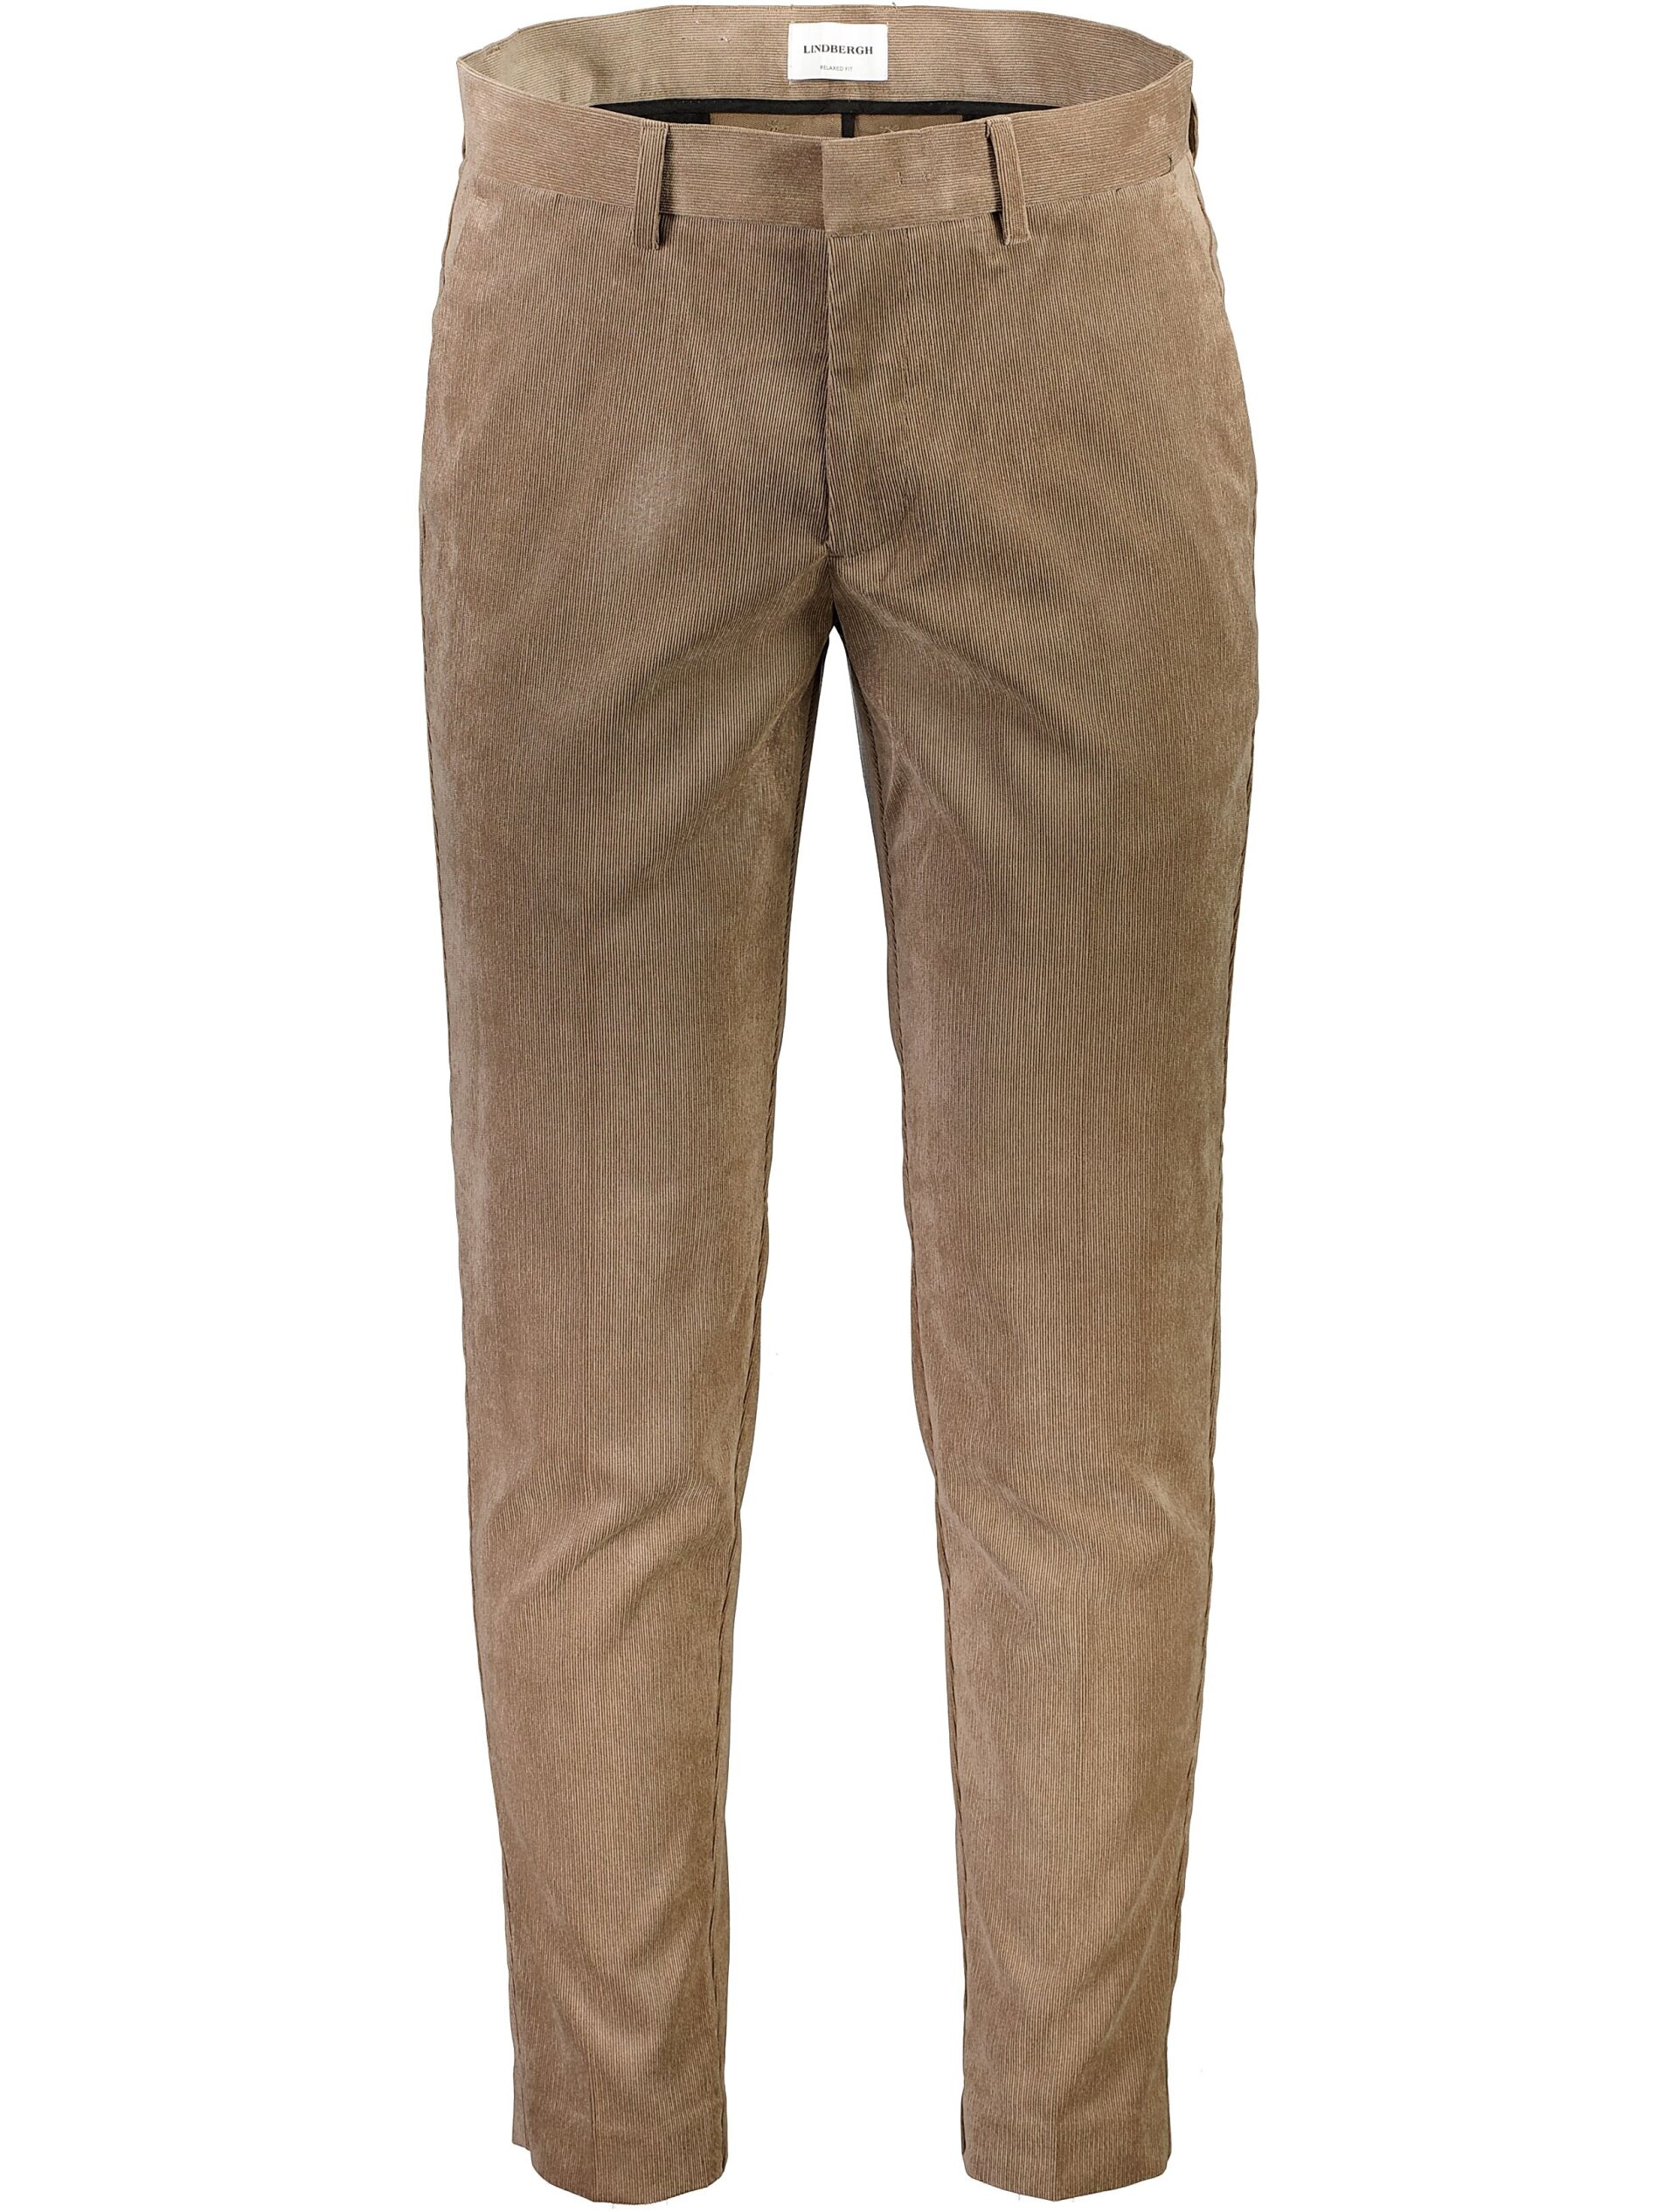 Corduroy trousers Corduroy trousers Green 30-006128